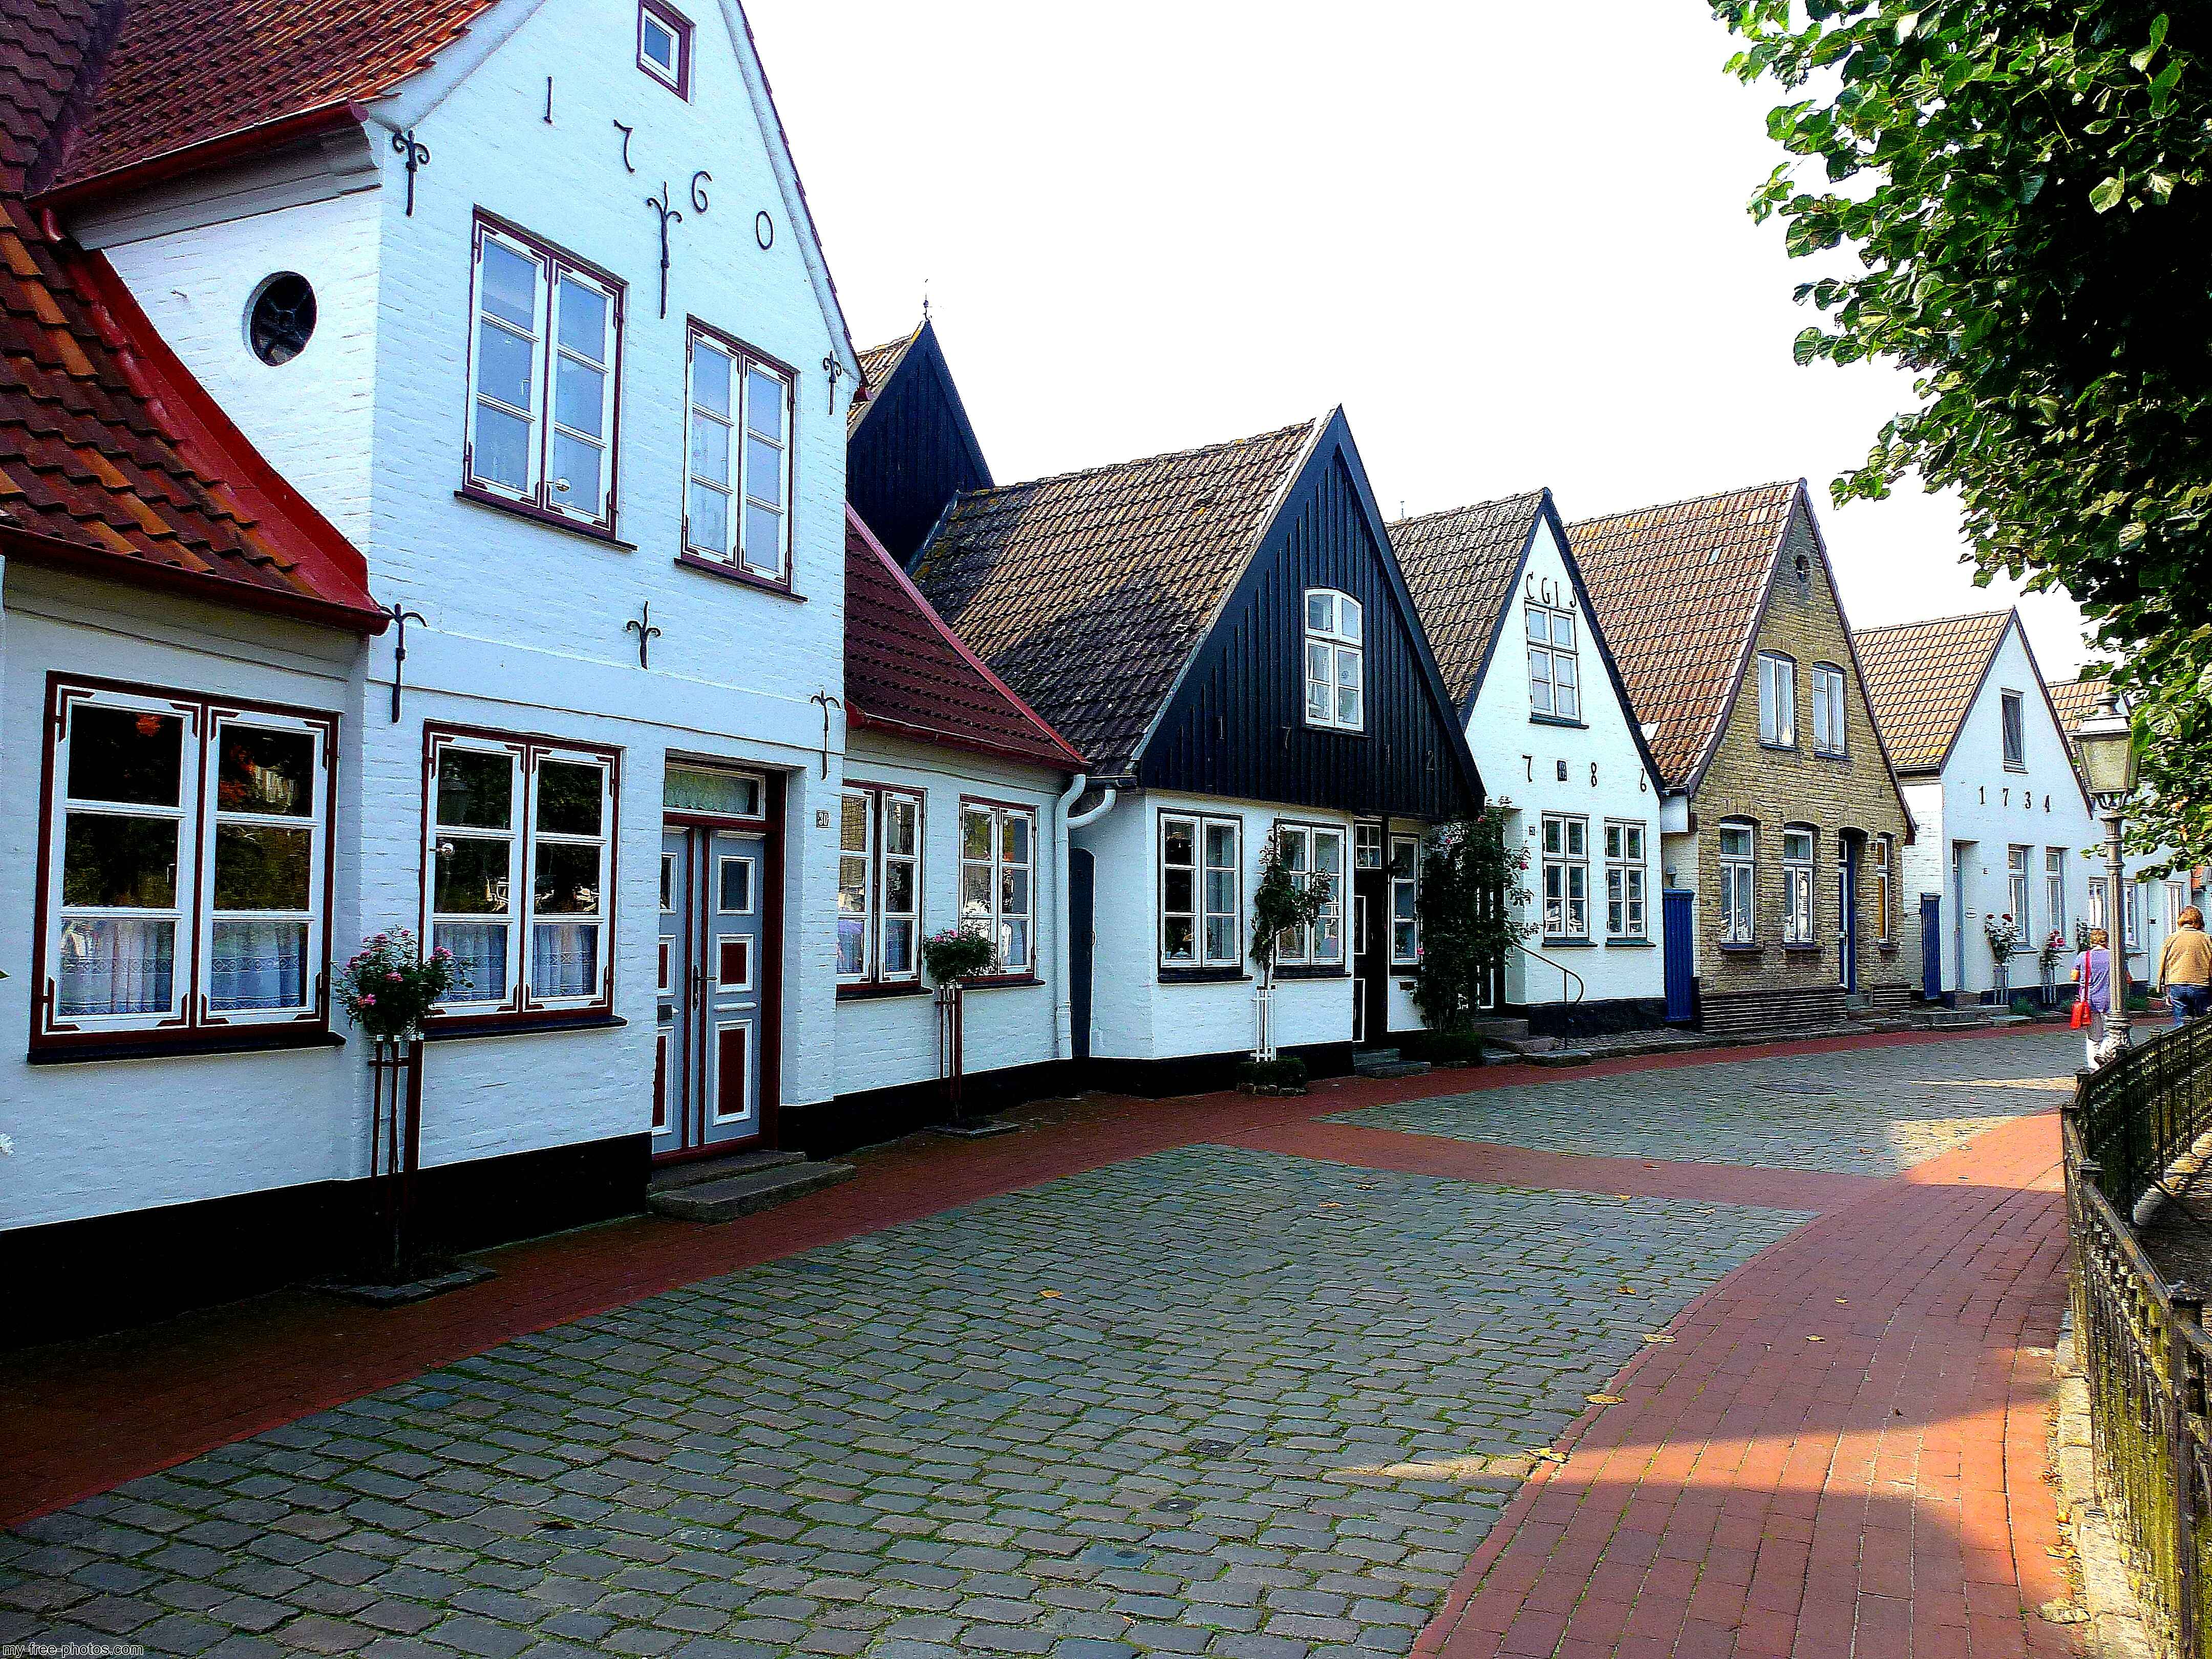 Schleswig,germany